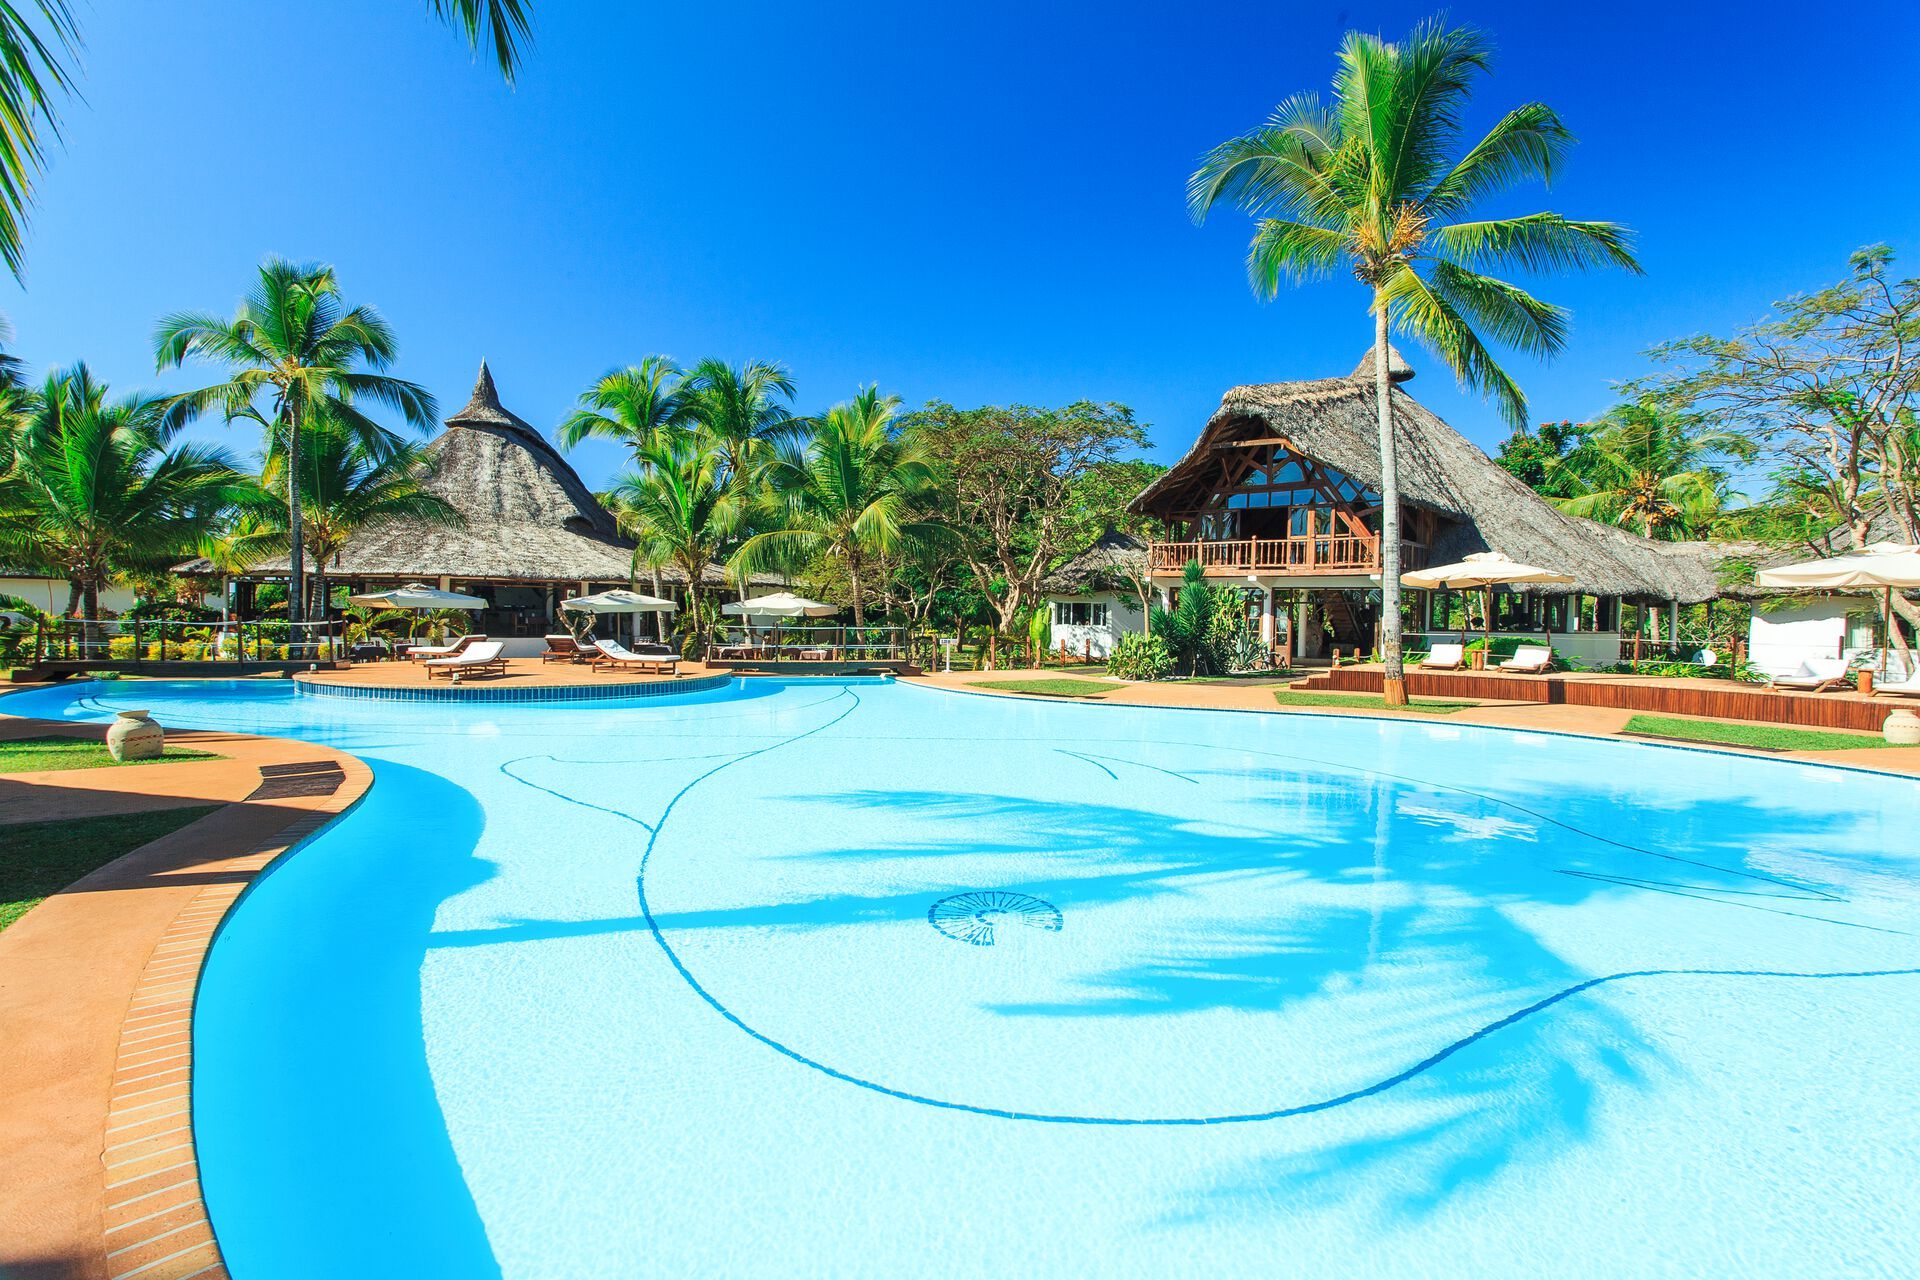 Madagascar - Voi Amarina Resort 4* - Adult Only